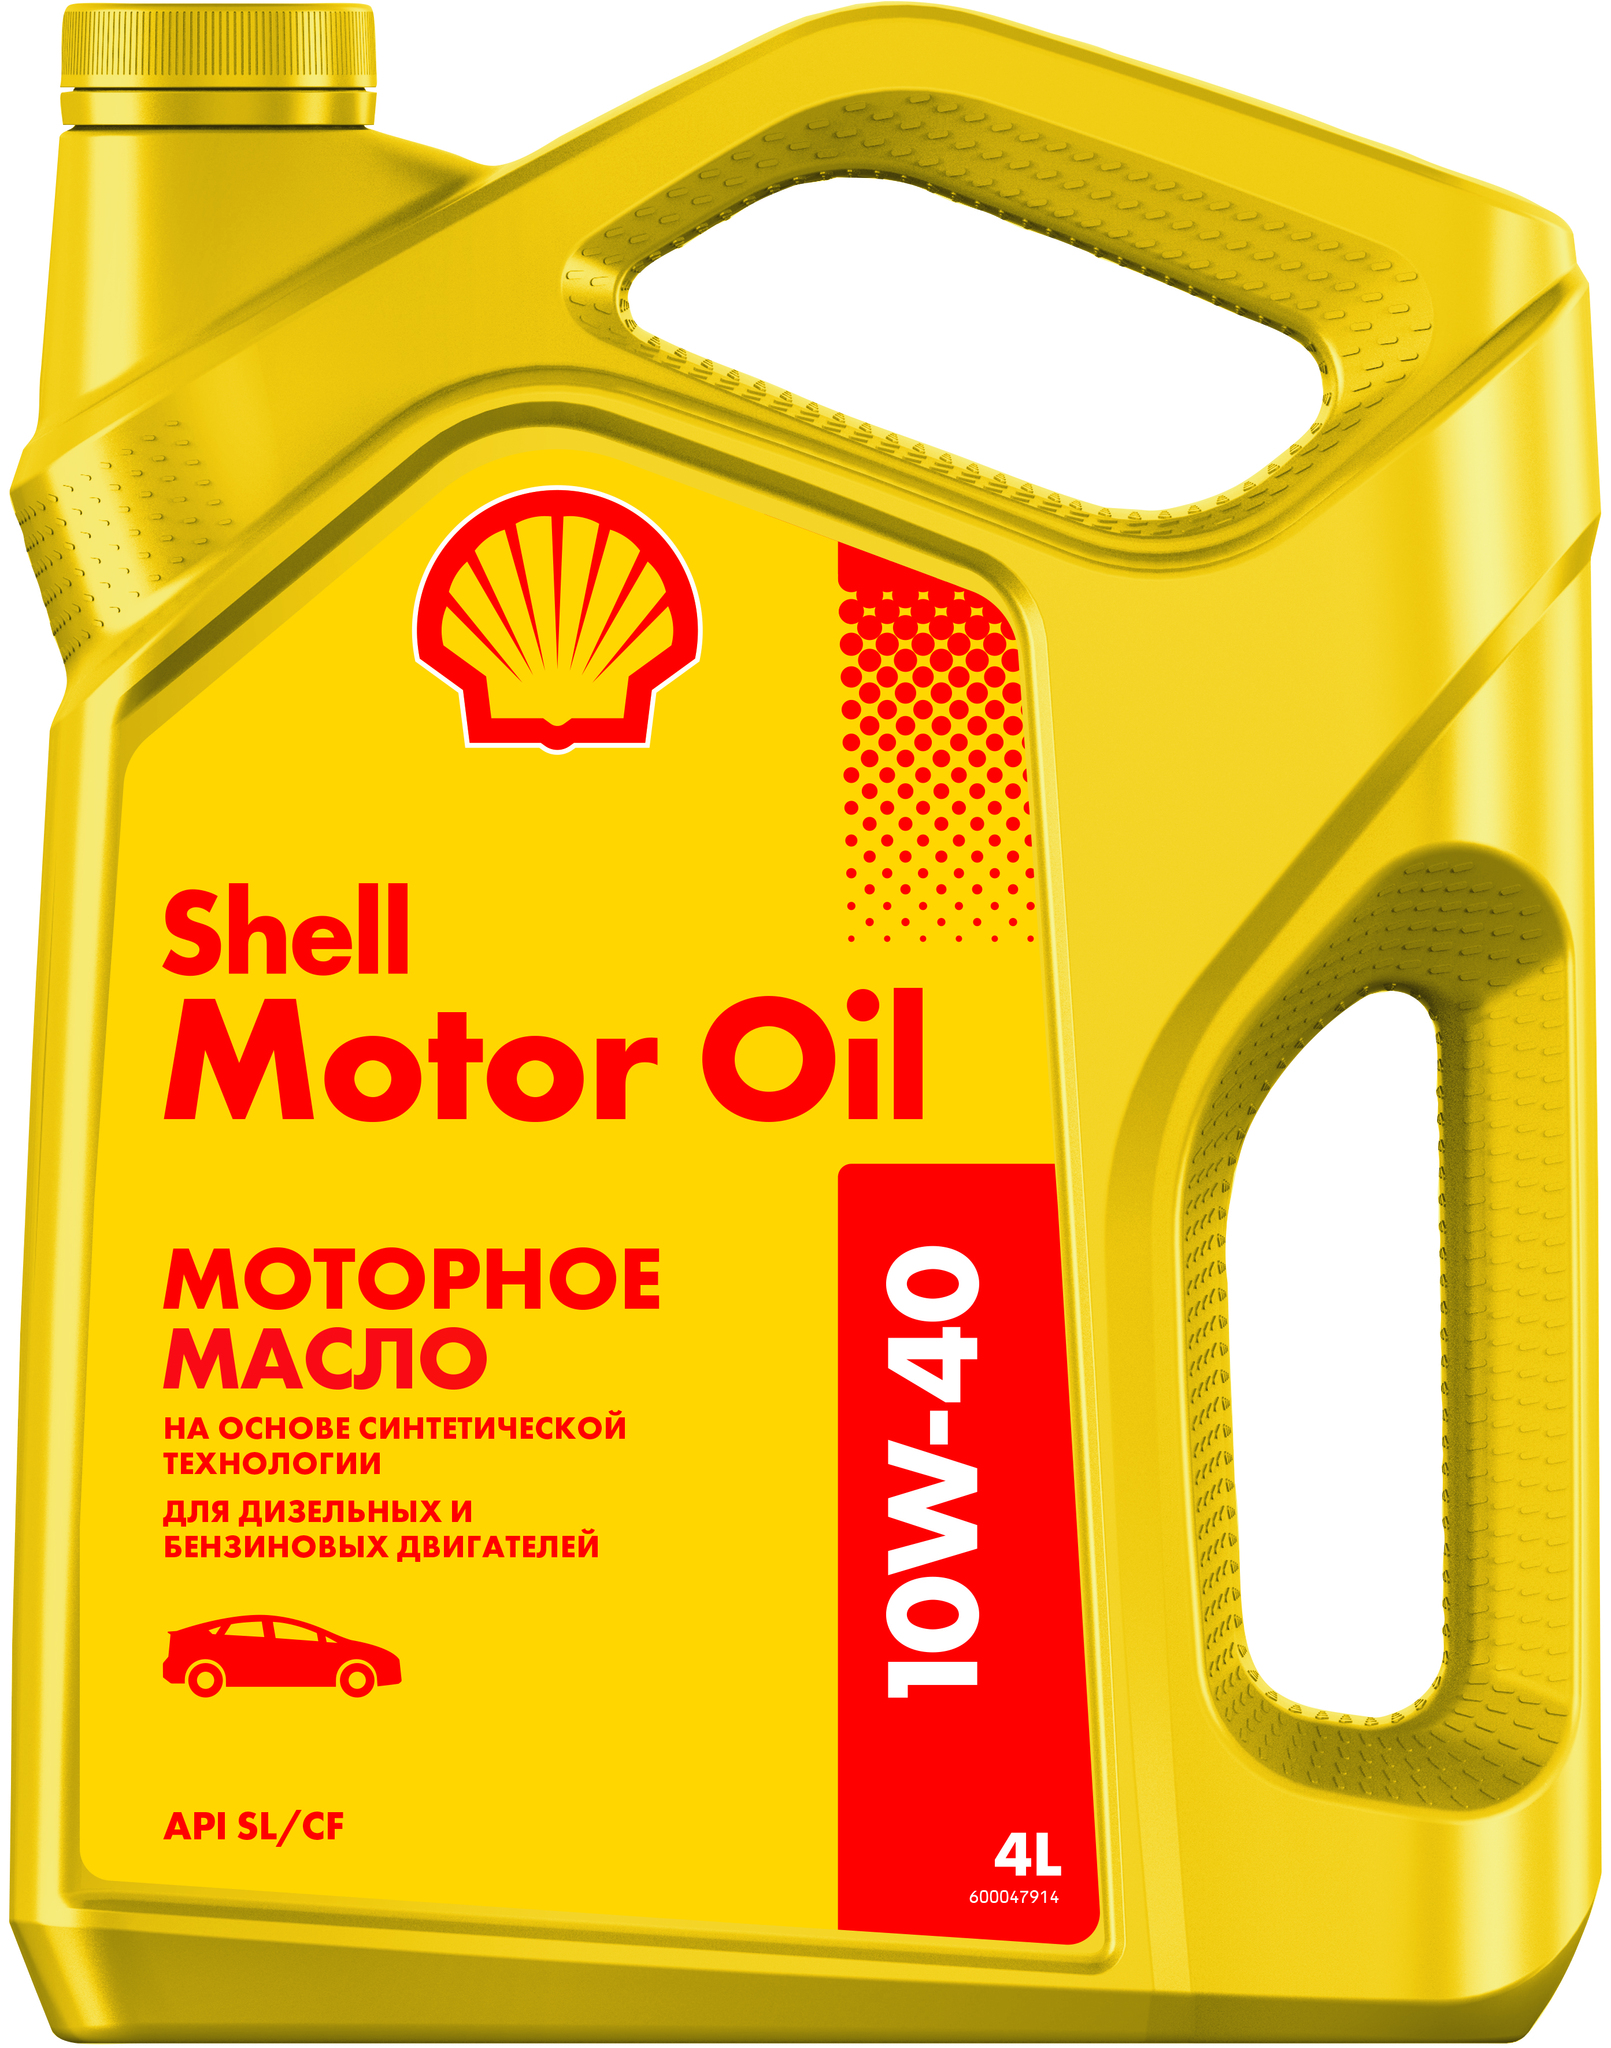 Shell Motor Oil 10W40 Масло моторное полусинтетическое